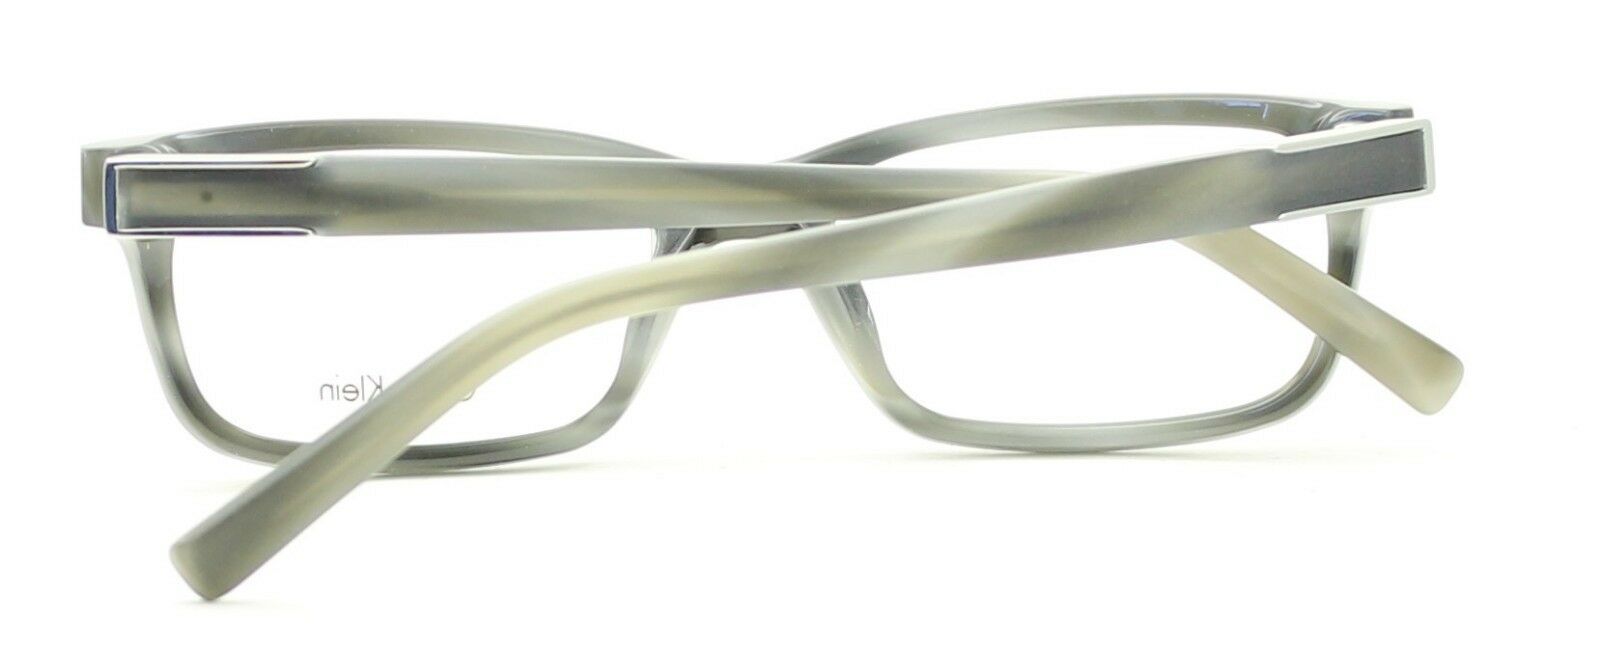 CALVIN KLEIN CK7881 041 Eyewear RX Optical FRAMES NEW Eyeglasses Glasses - BNIB